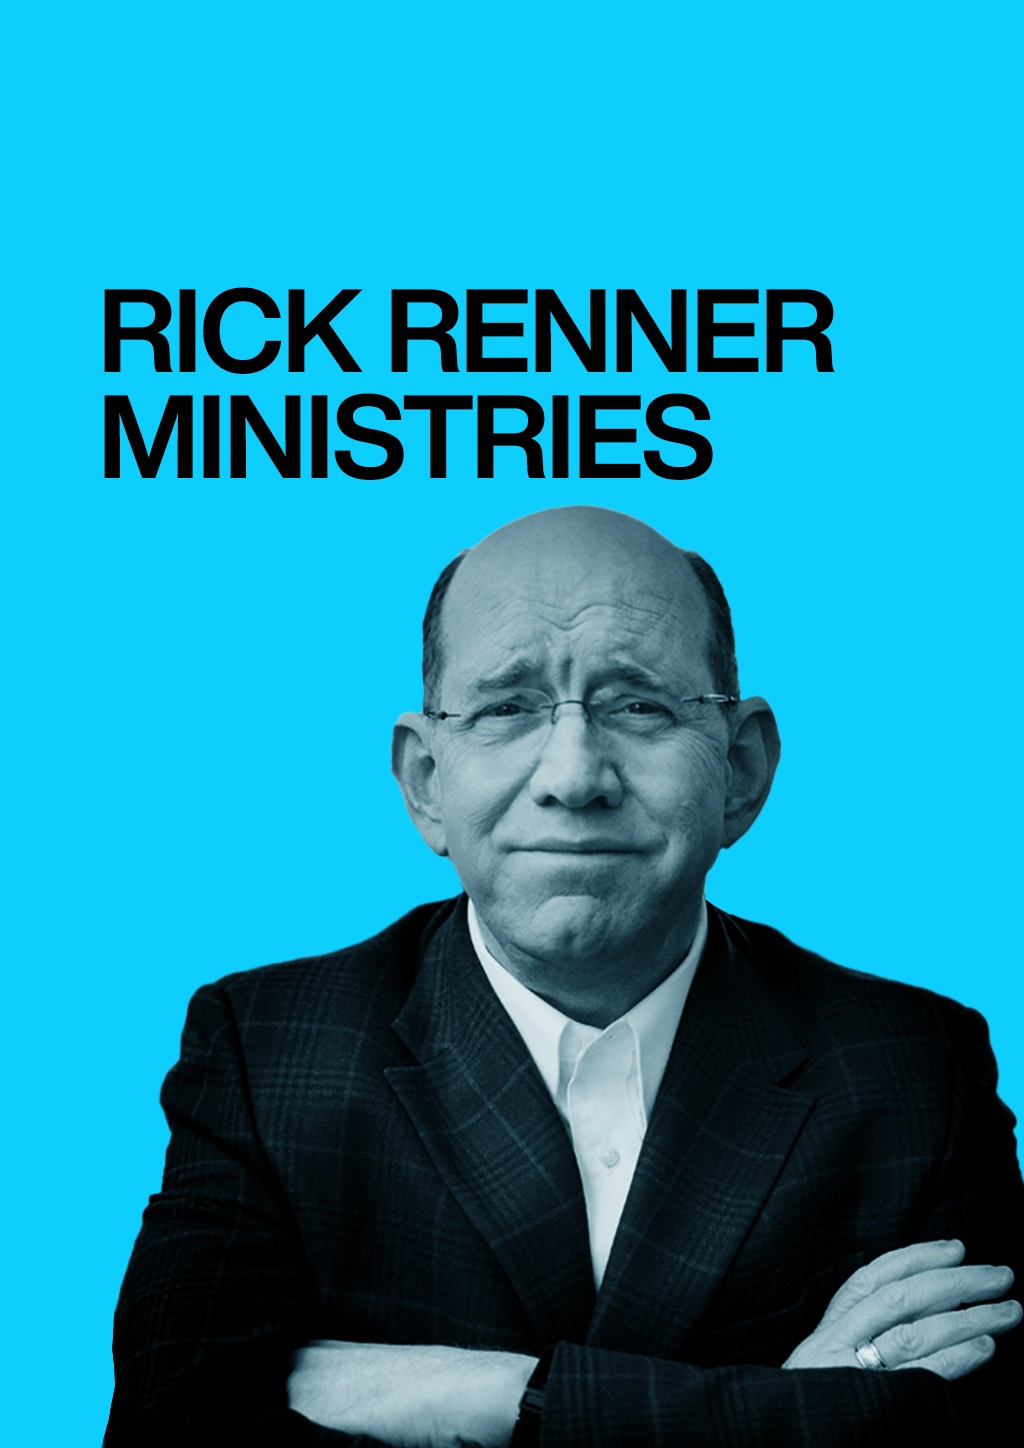 Rick Renner Ministry Card on GOD TV.